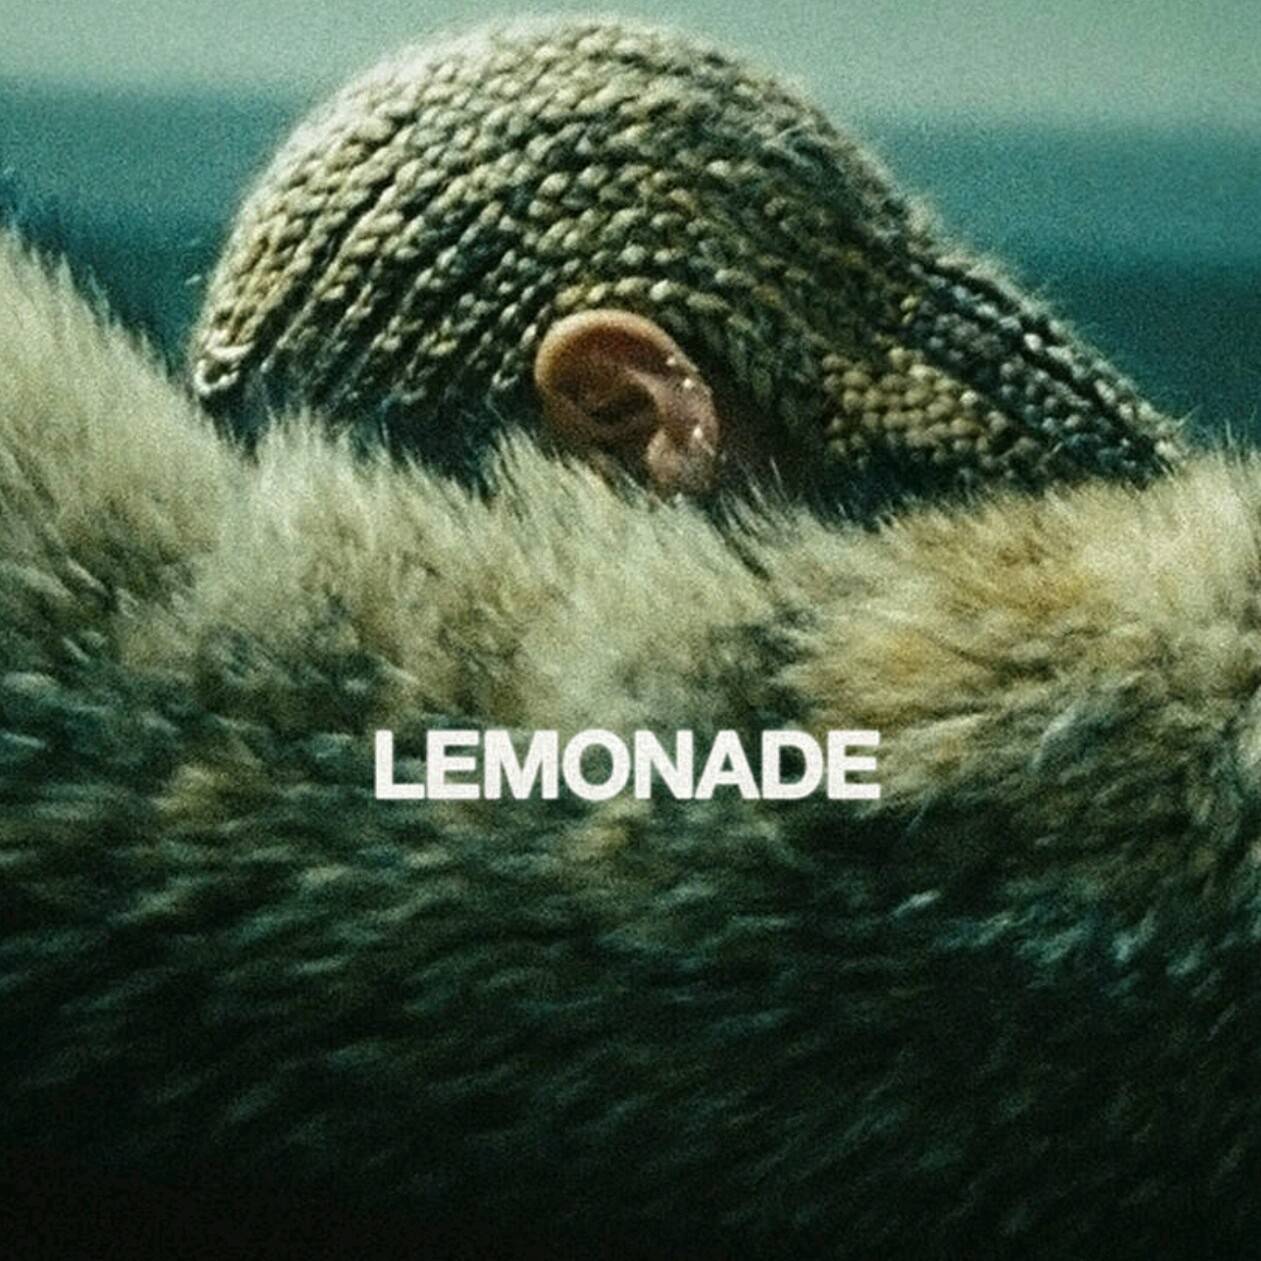 Beyonce - Lemonade (0 889854 467517)